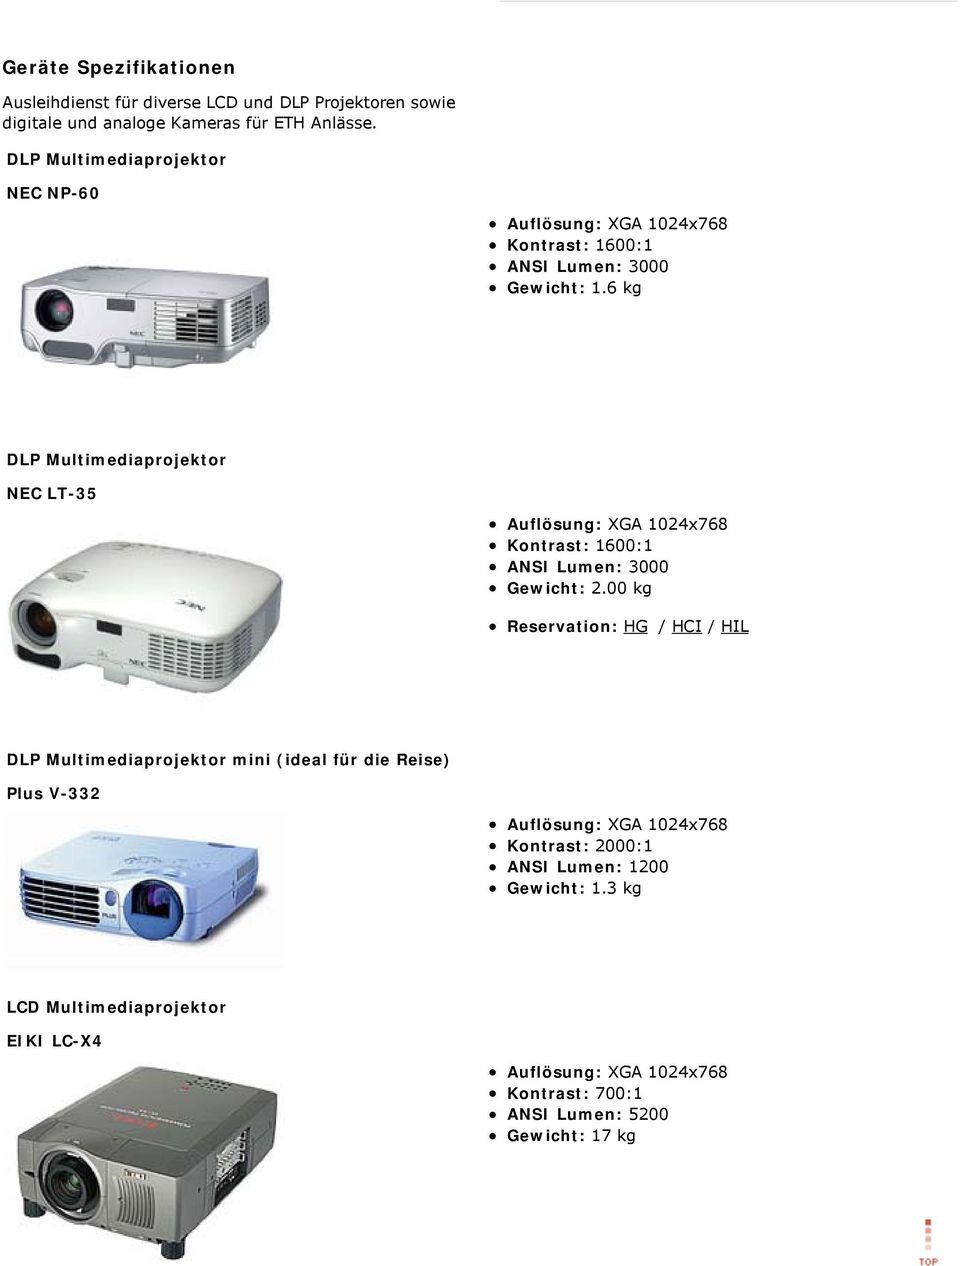 6 kg DLP Multimediaprojektor NEC LT-35 Auflösung: XGA 1024x768 Kontrast: 1600:1 ANSI Lumen: 3000 2.